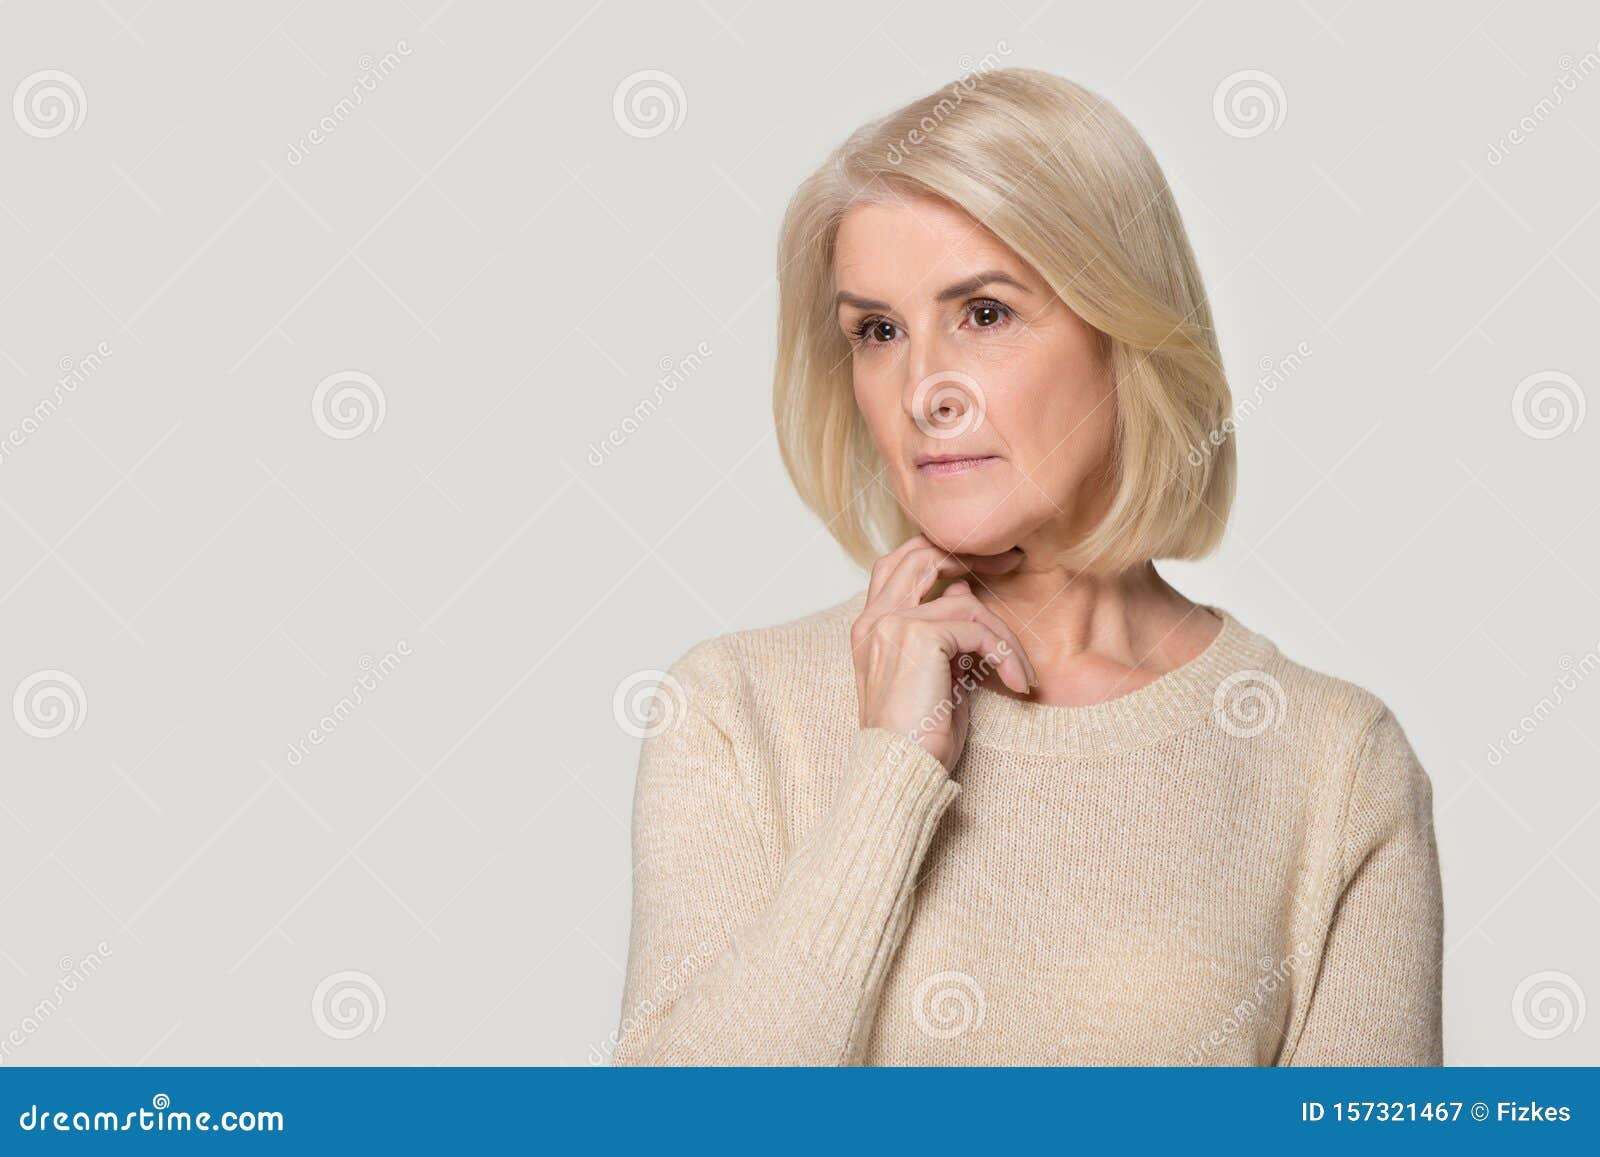 pensive senior woman  on grey background thinking